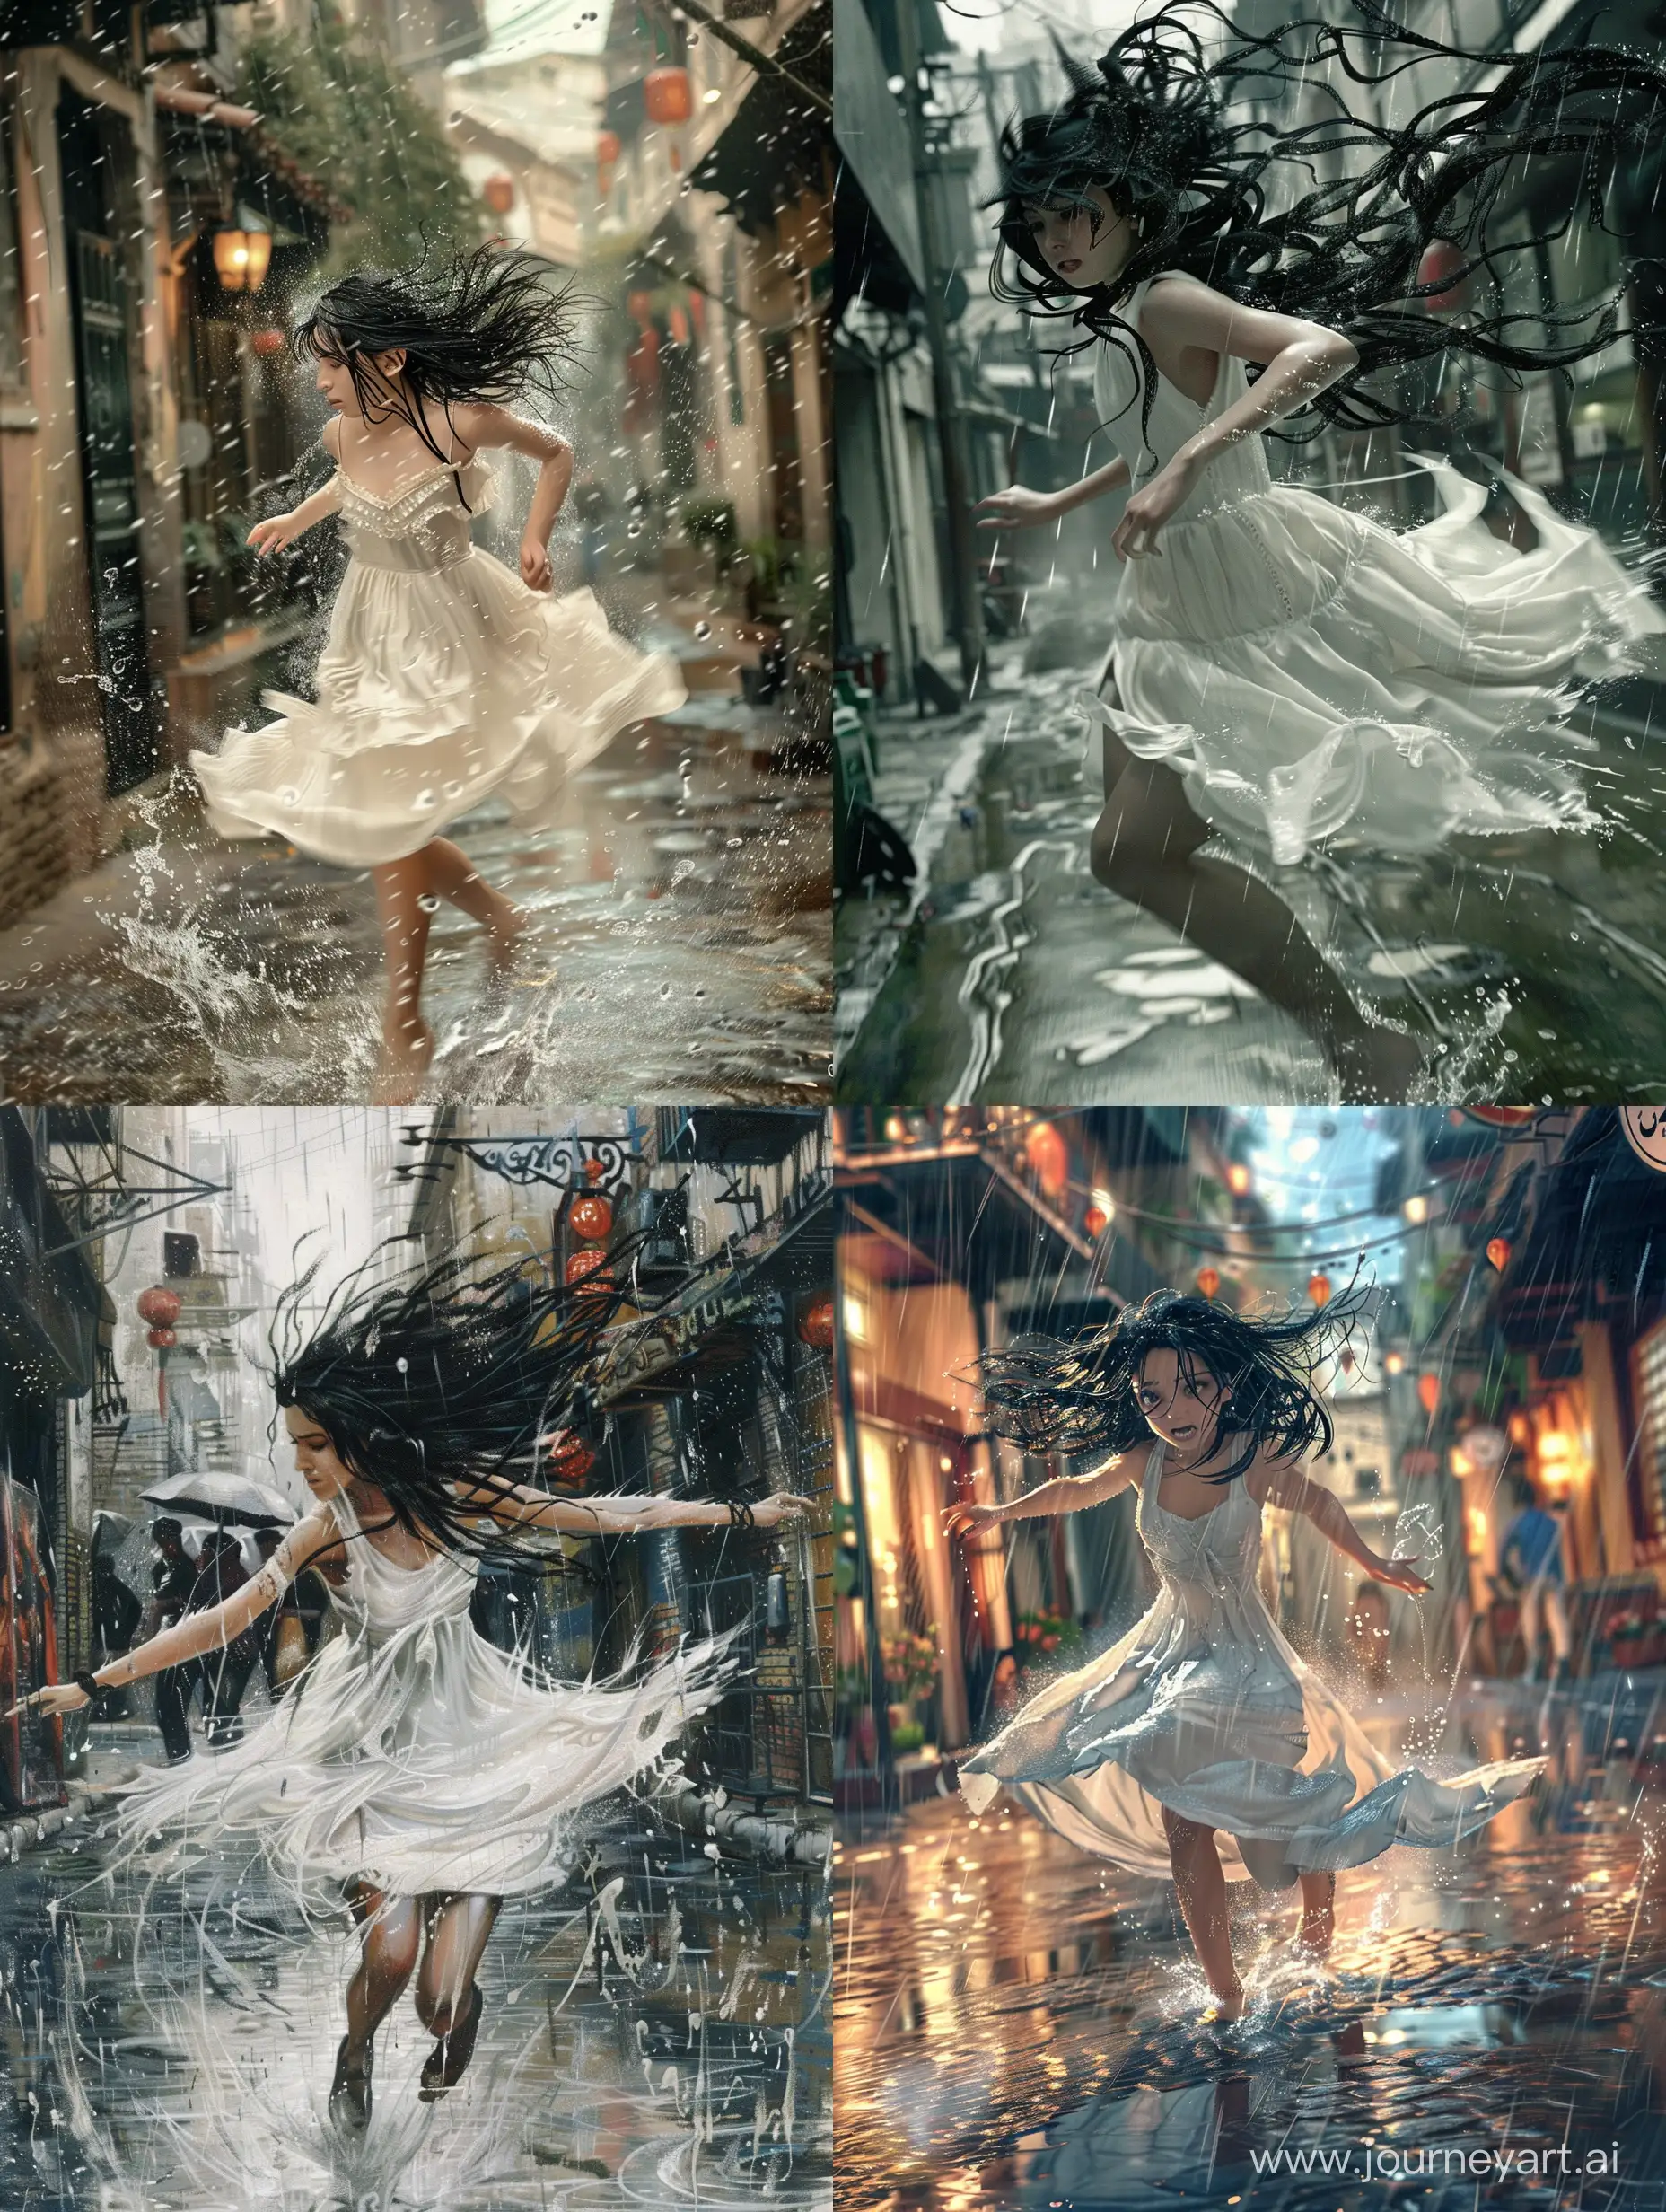 Elegant-Persian-Girl-Dancing-in-the-Rain-with-Wet-Hair-and-Dress